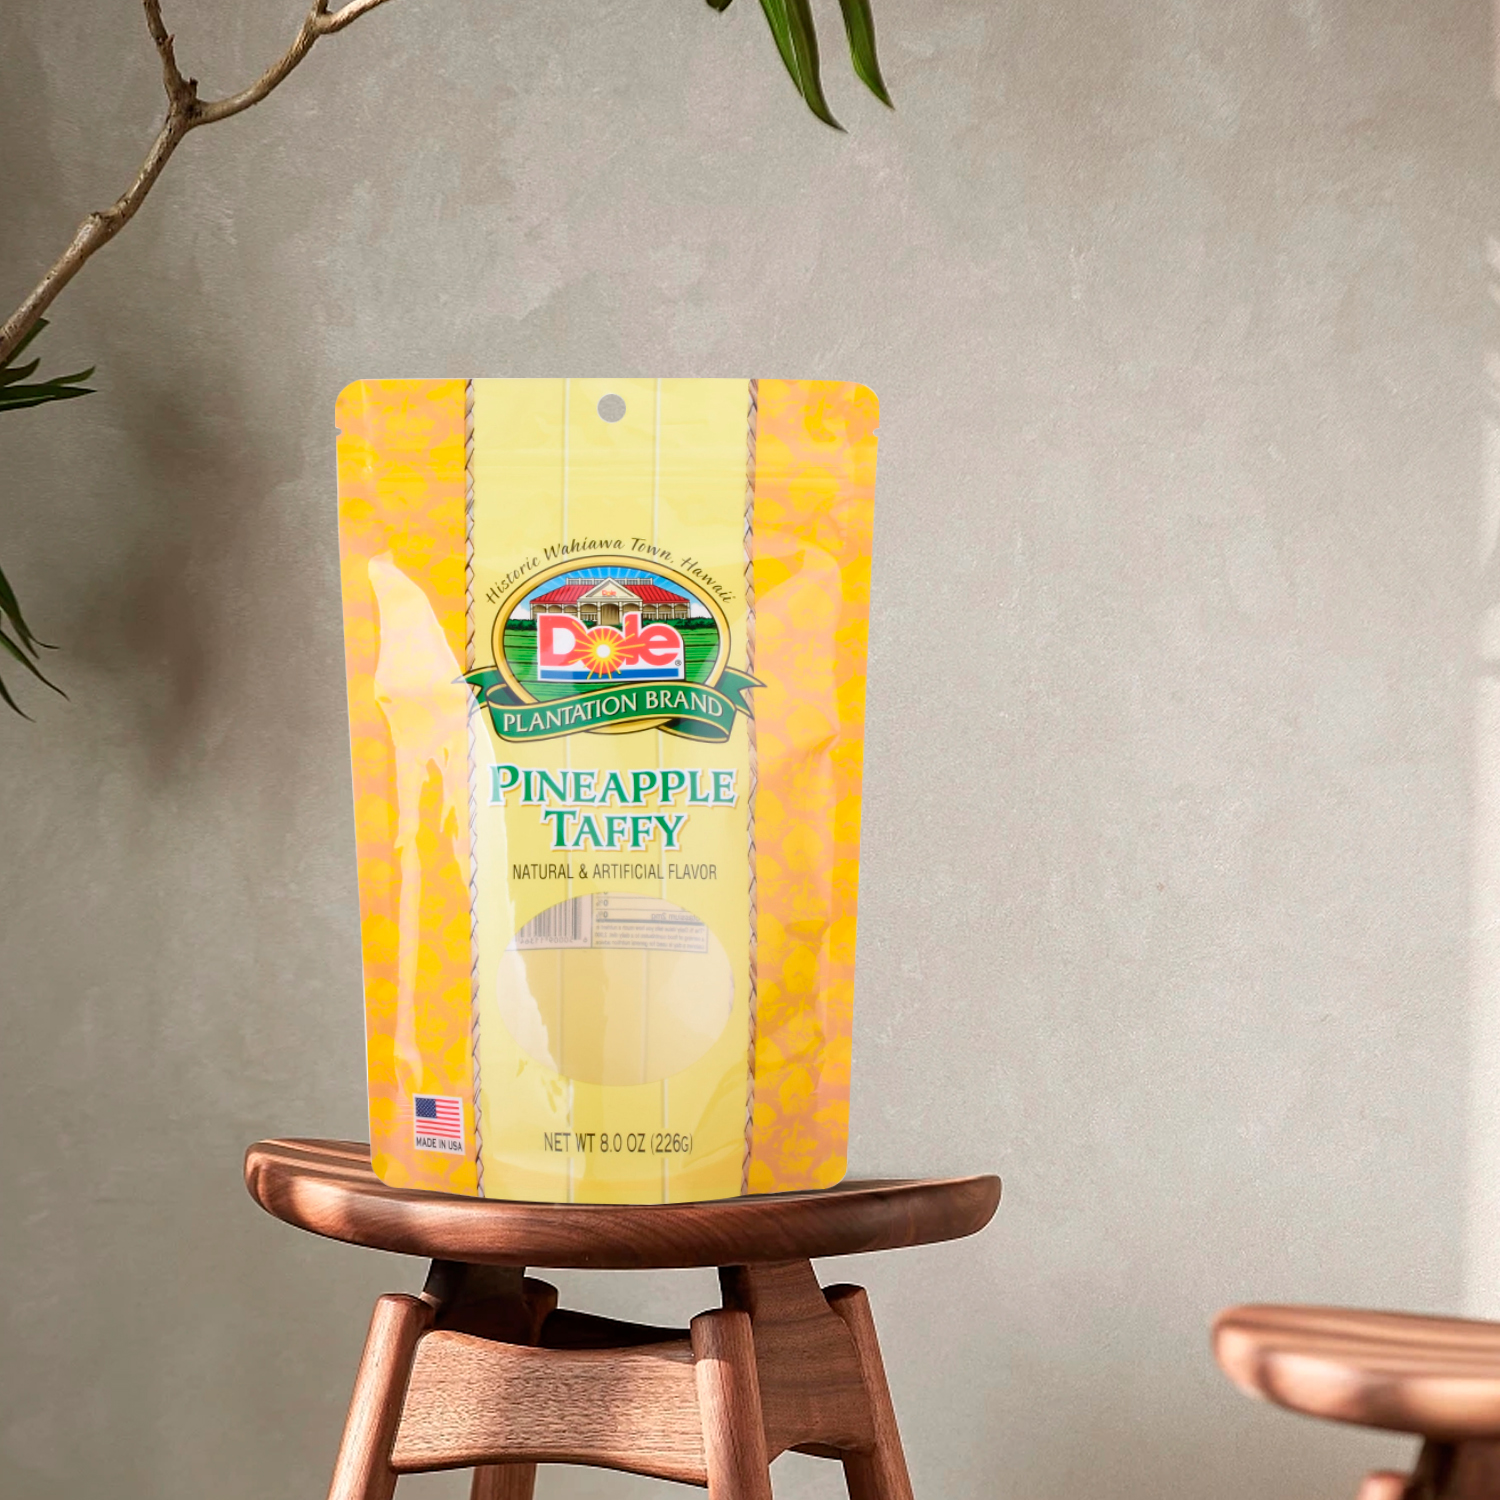 Los bolsos de celofán compostables amistosos de Eco compostables se levantan las bolsitas de té